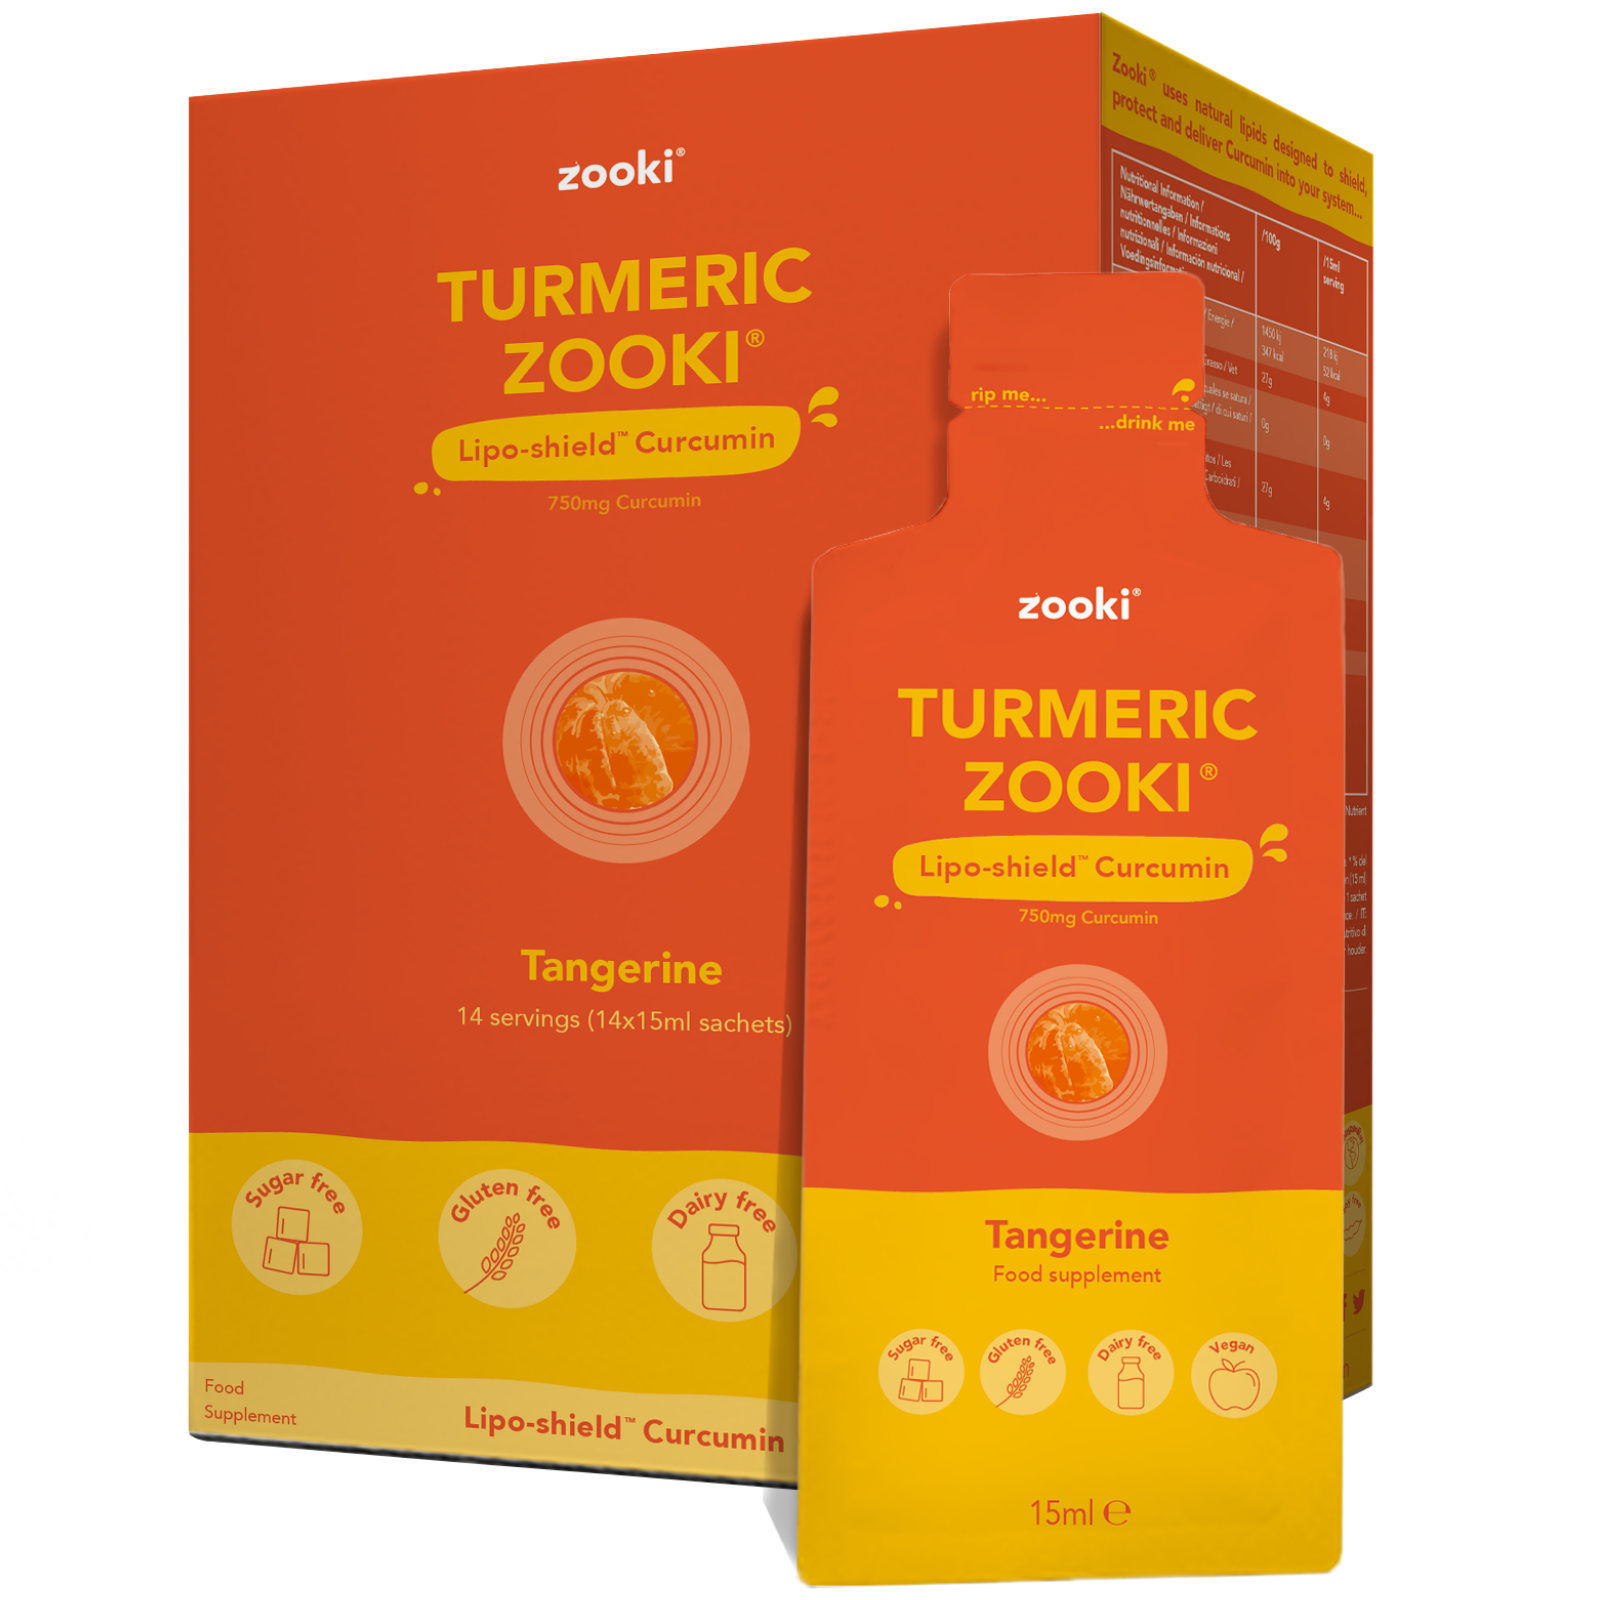 Turmeric Zooki - Turmeric Shots - 750mg Full Spectrum Curcumin per 15ml Sachet - Tangerine Flavour Box of 14